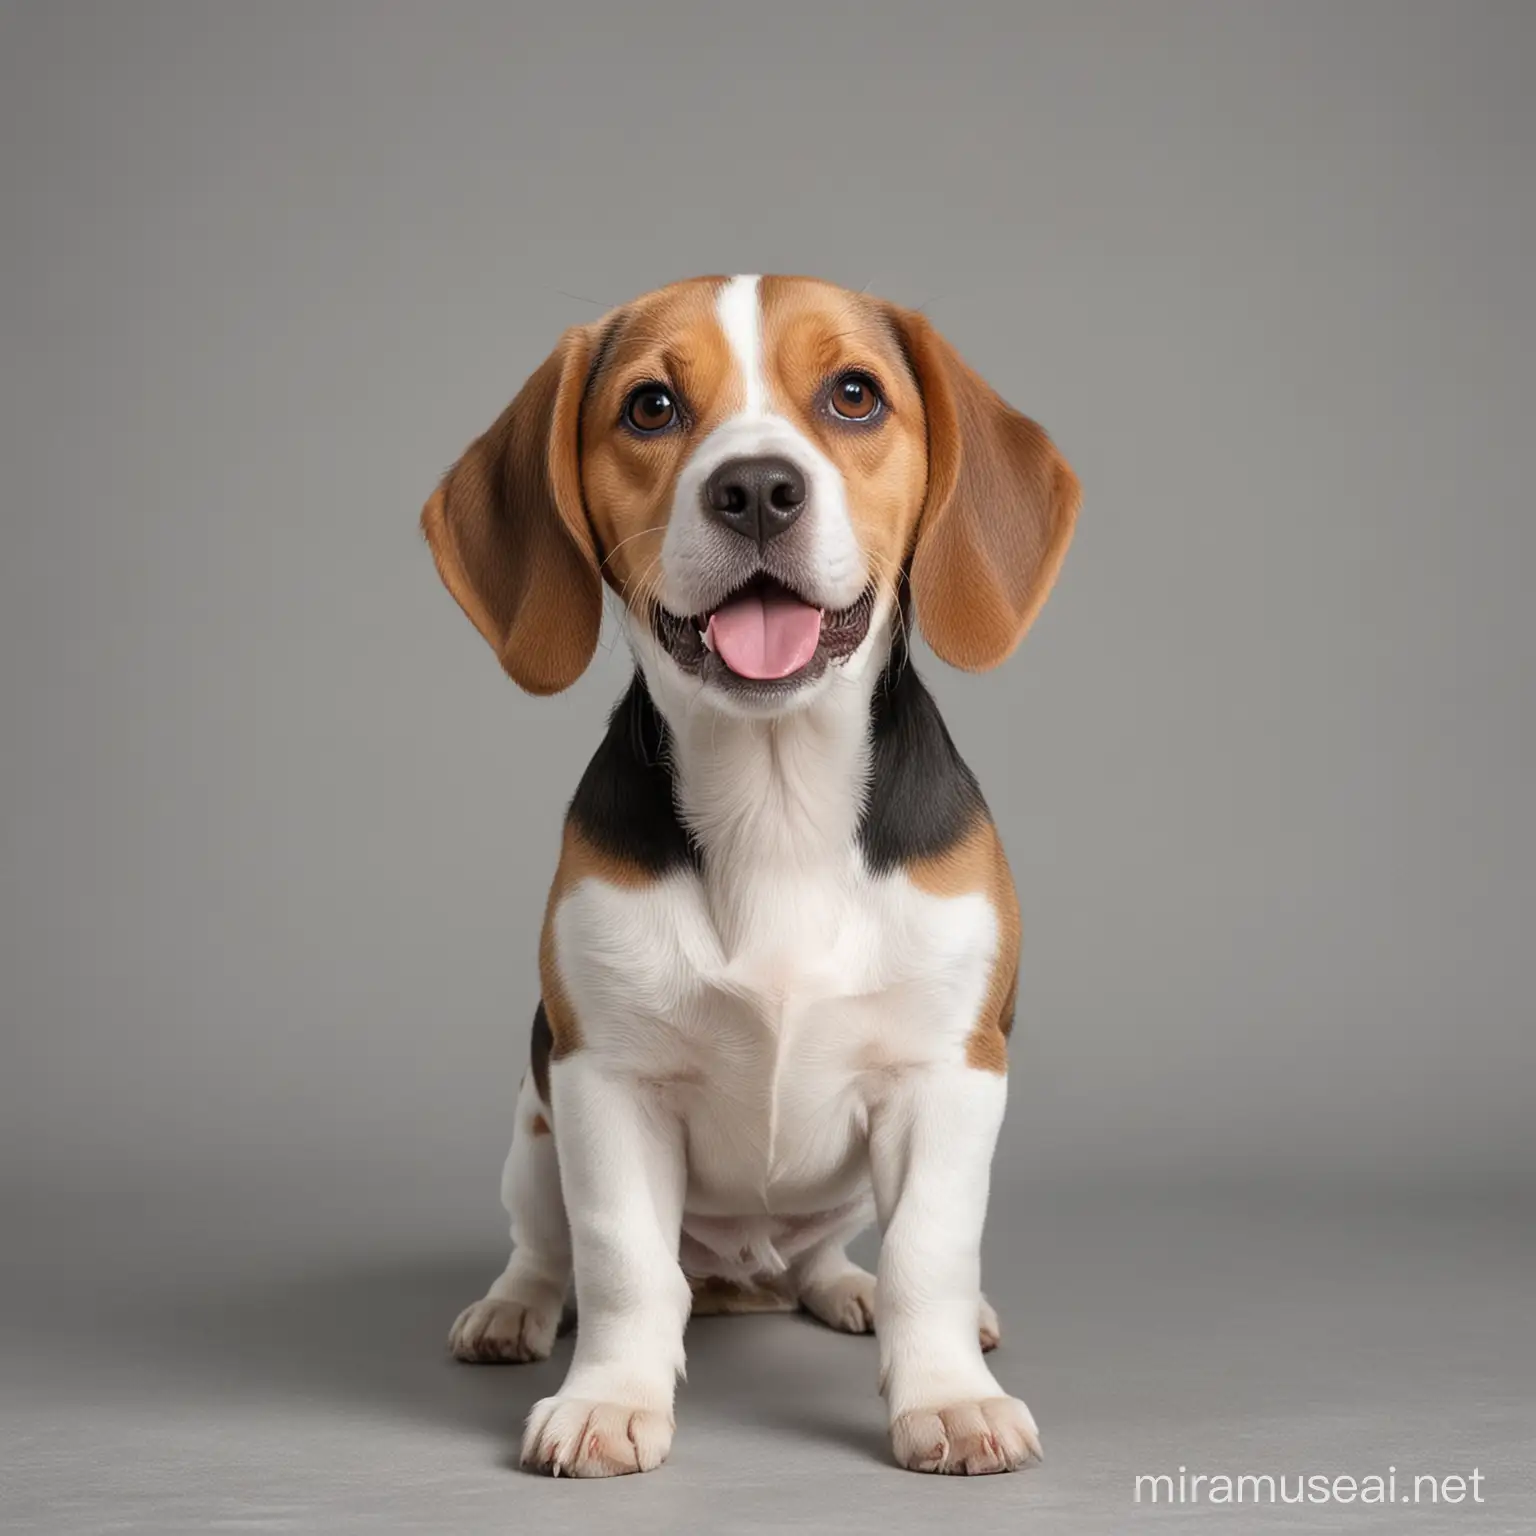 Cheerful Beagle Pup Posing on Neutral Gray Backdrop